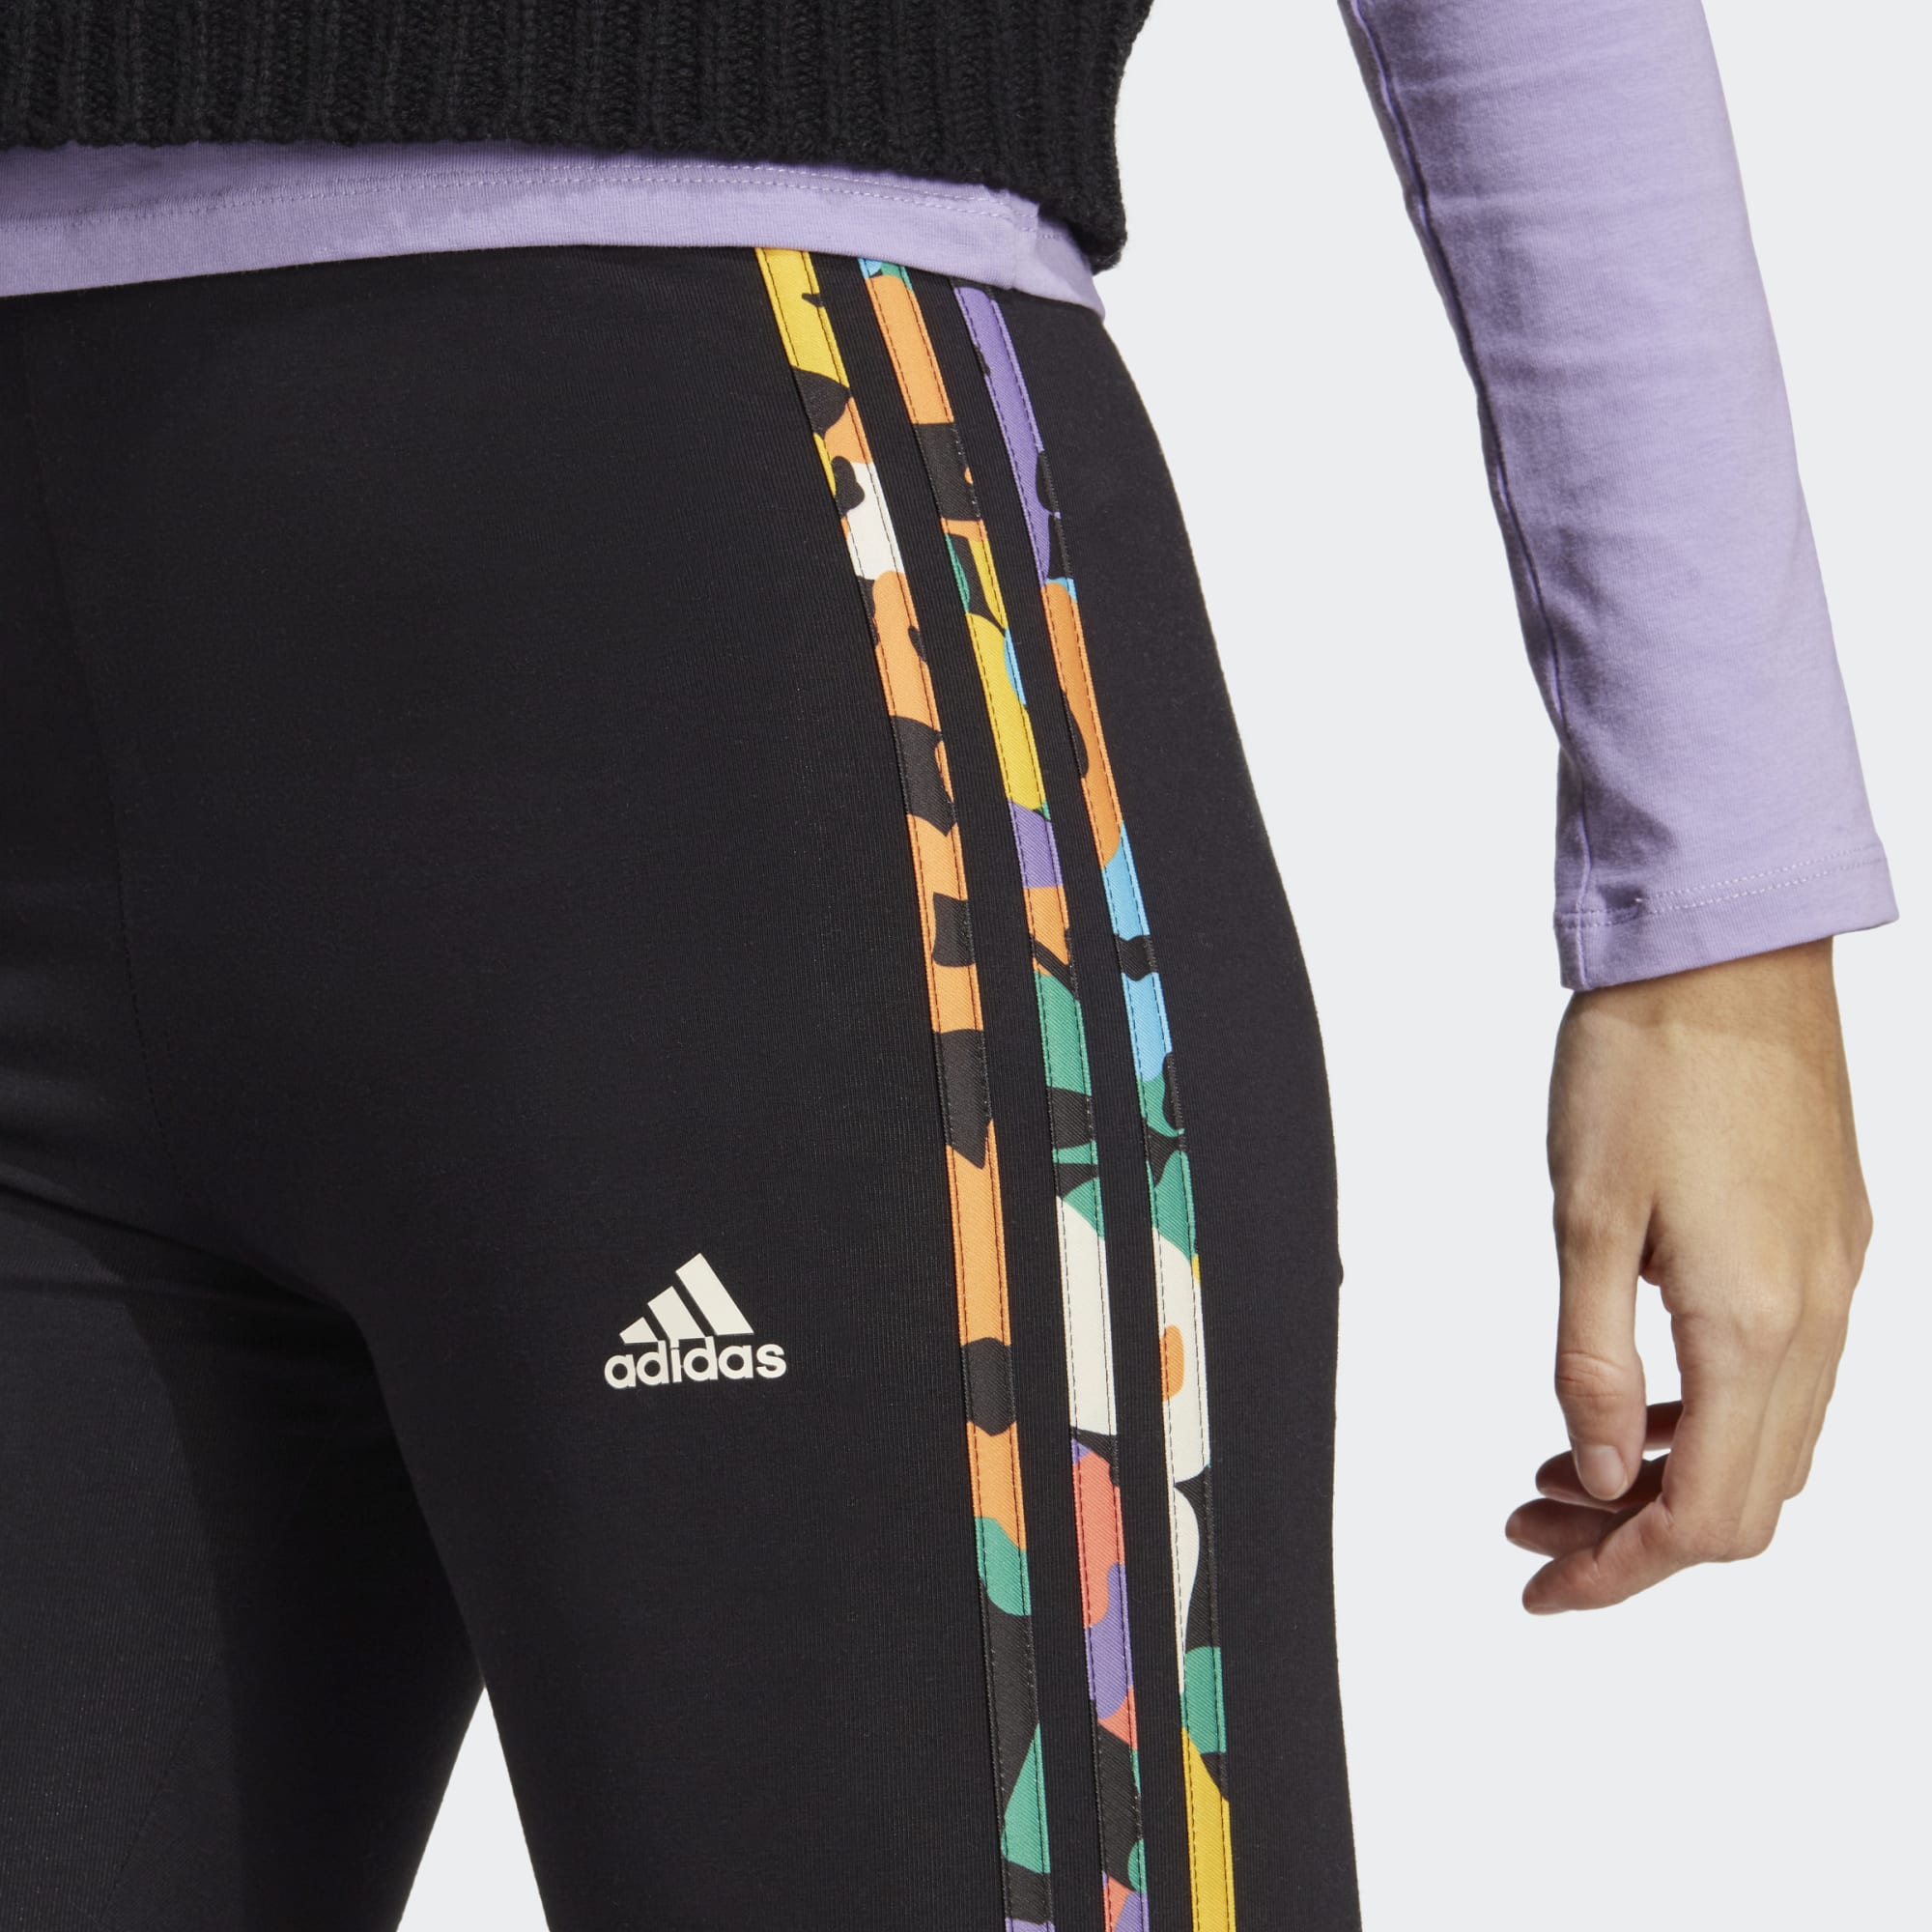 adidas Essentials 3-Stripes High-Waist Leggings Black/Multicolor